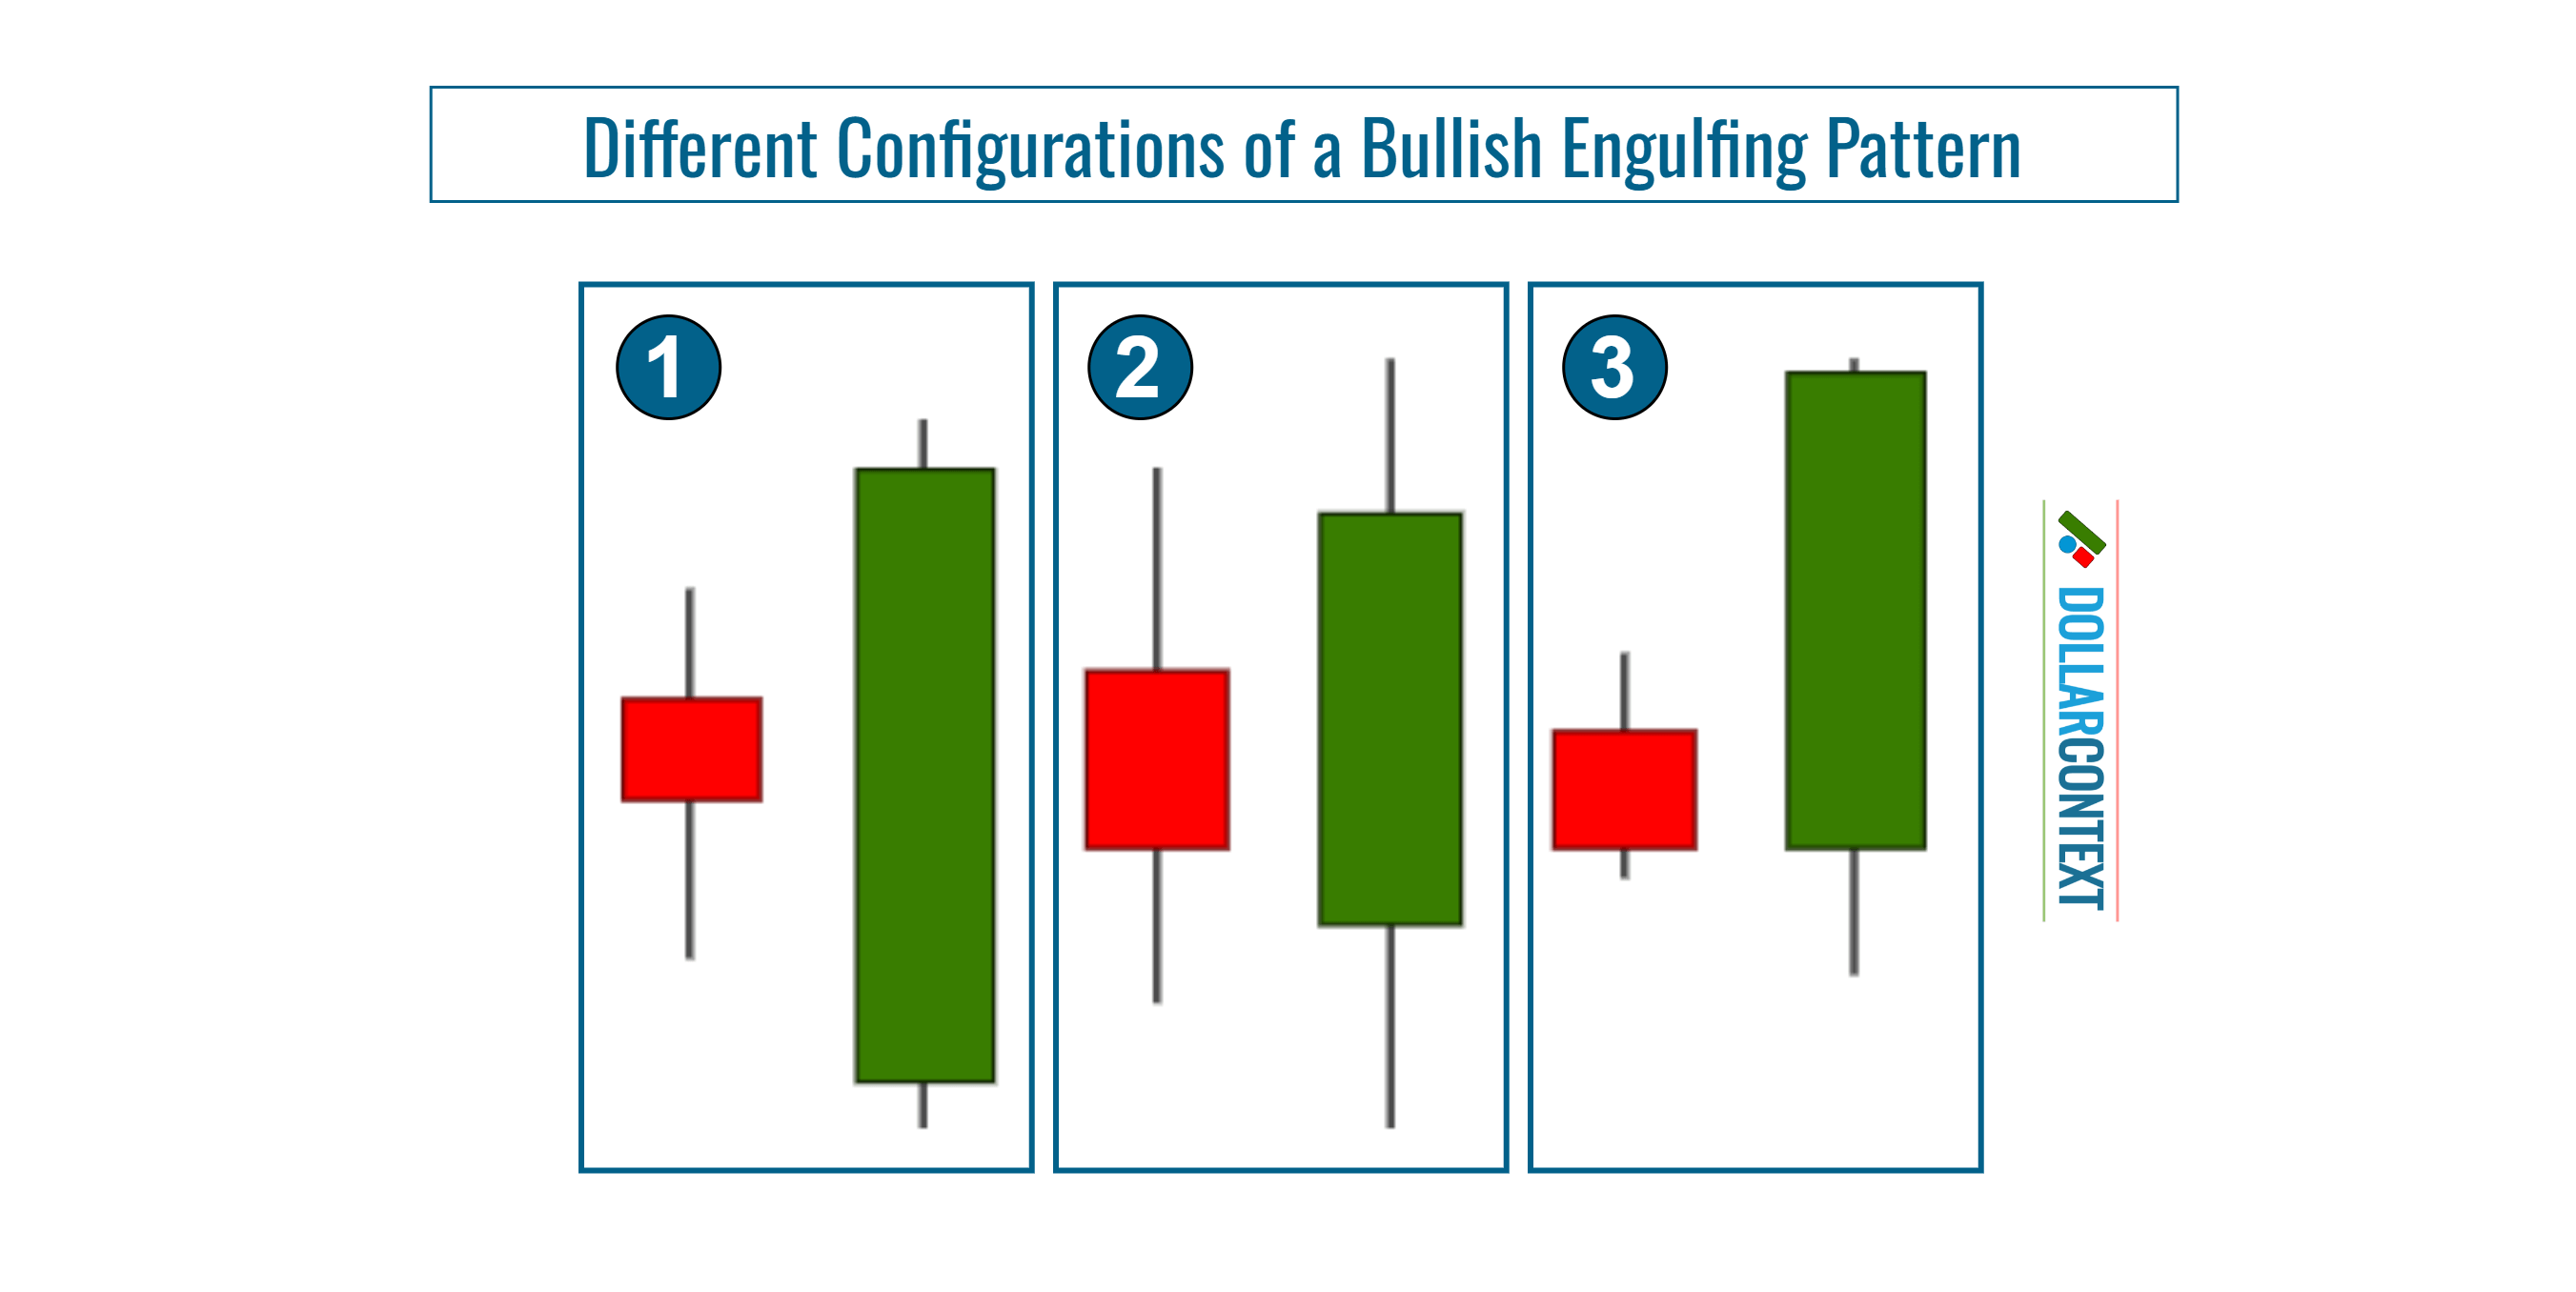 Variations of a Bullish Engulfing Pattern